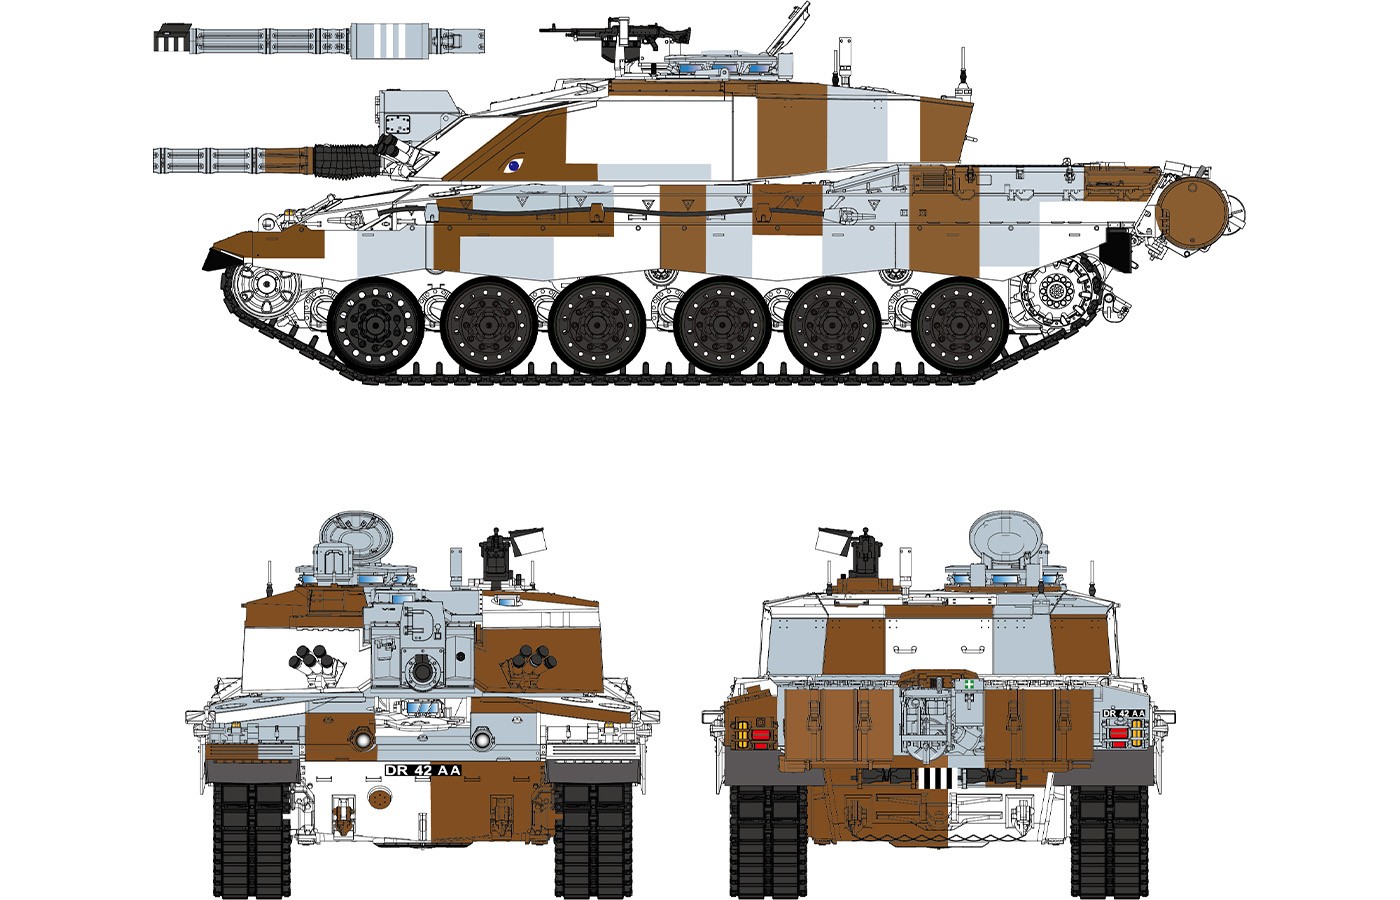 meng models mk v female british main battle tank 1/35